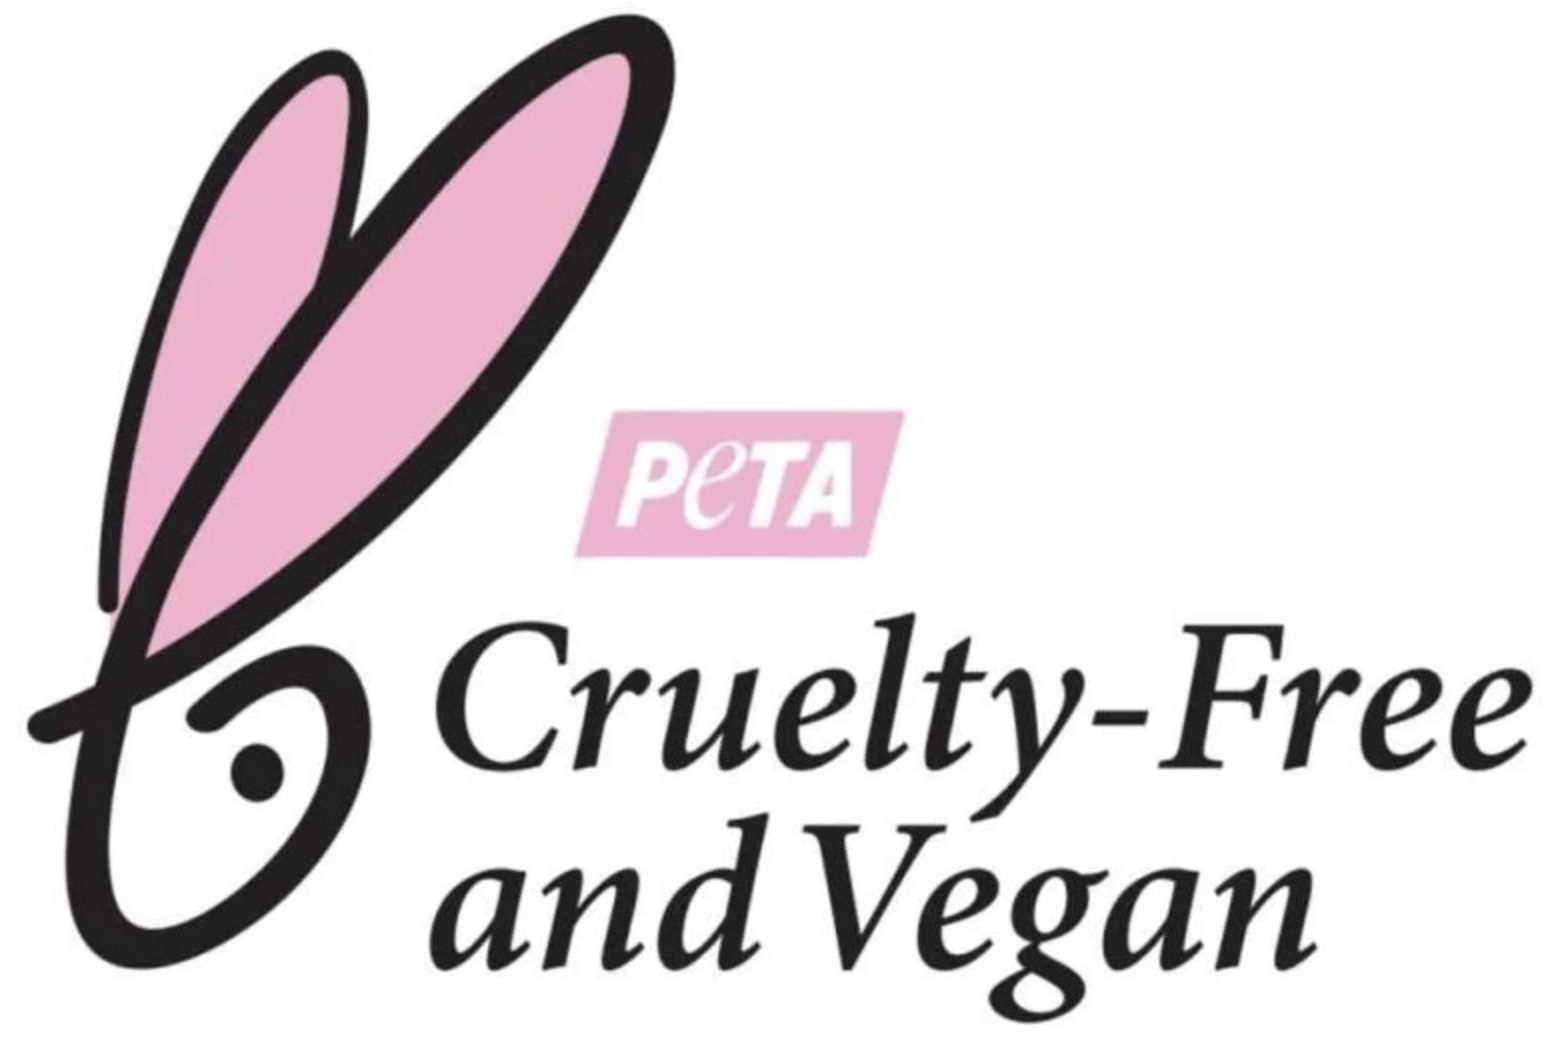 PETA-approved Vegan logo